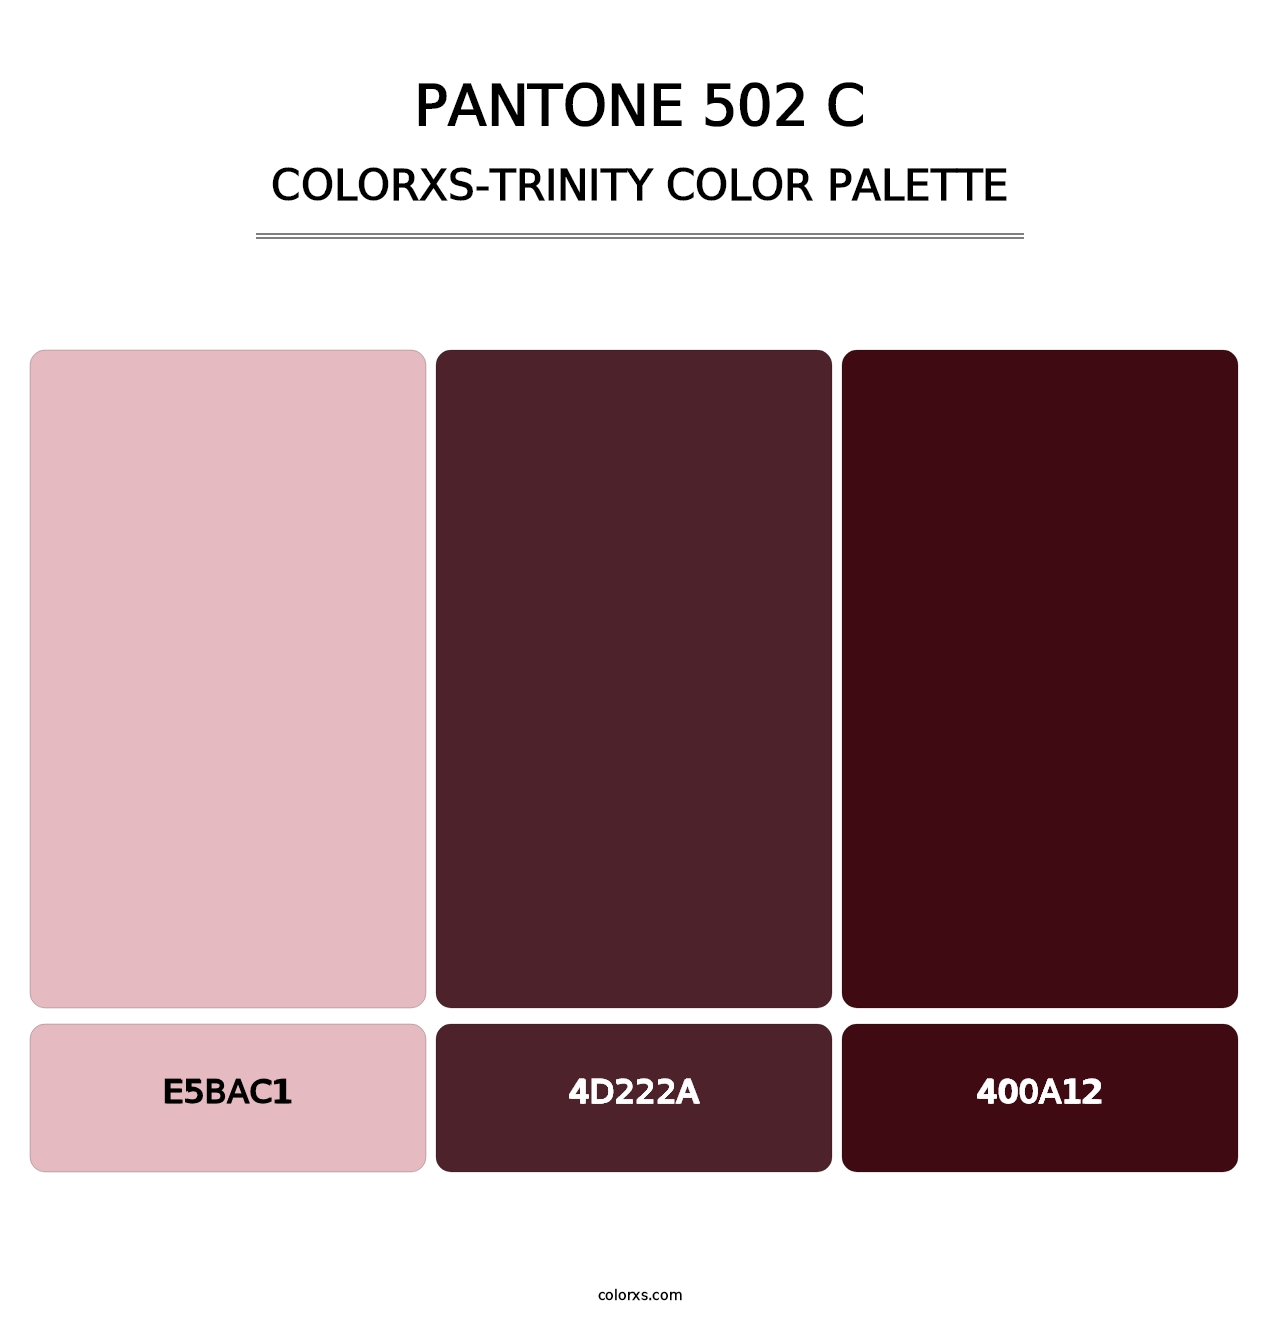 PANTONE 502 C - Colorxs Trinity Palette